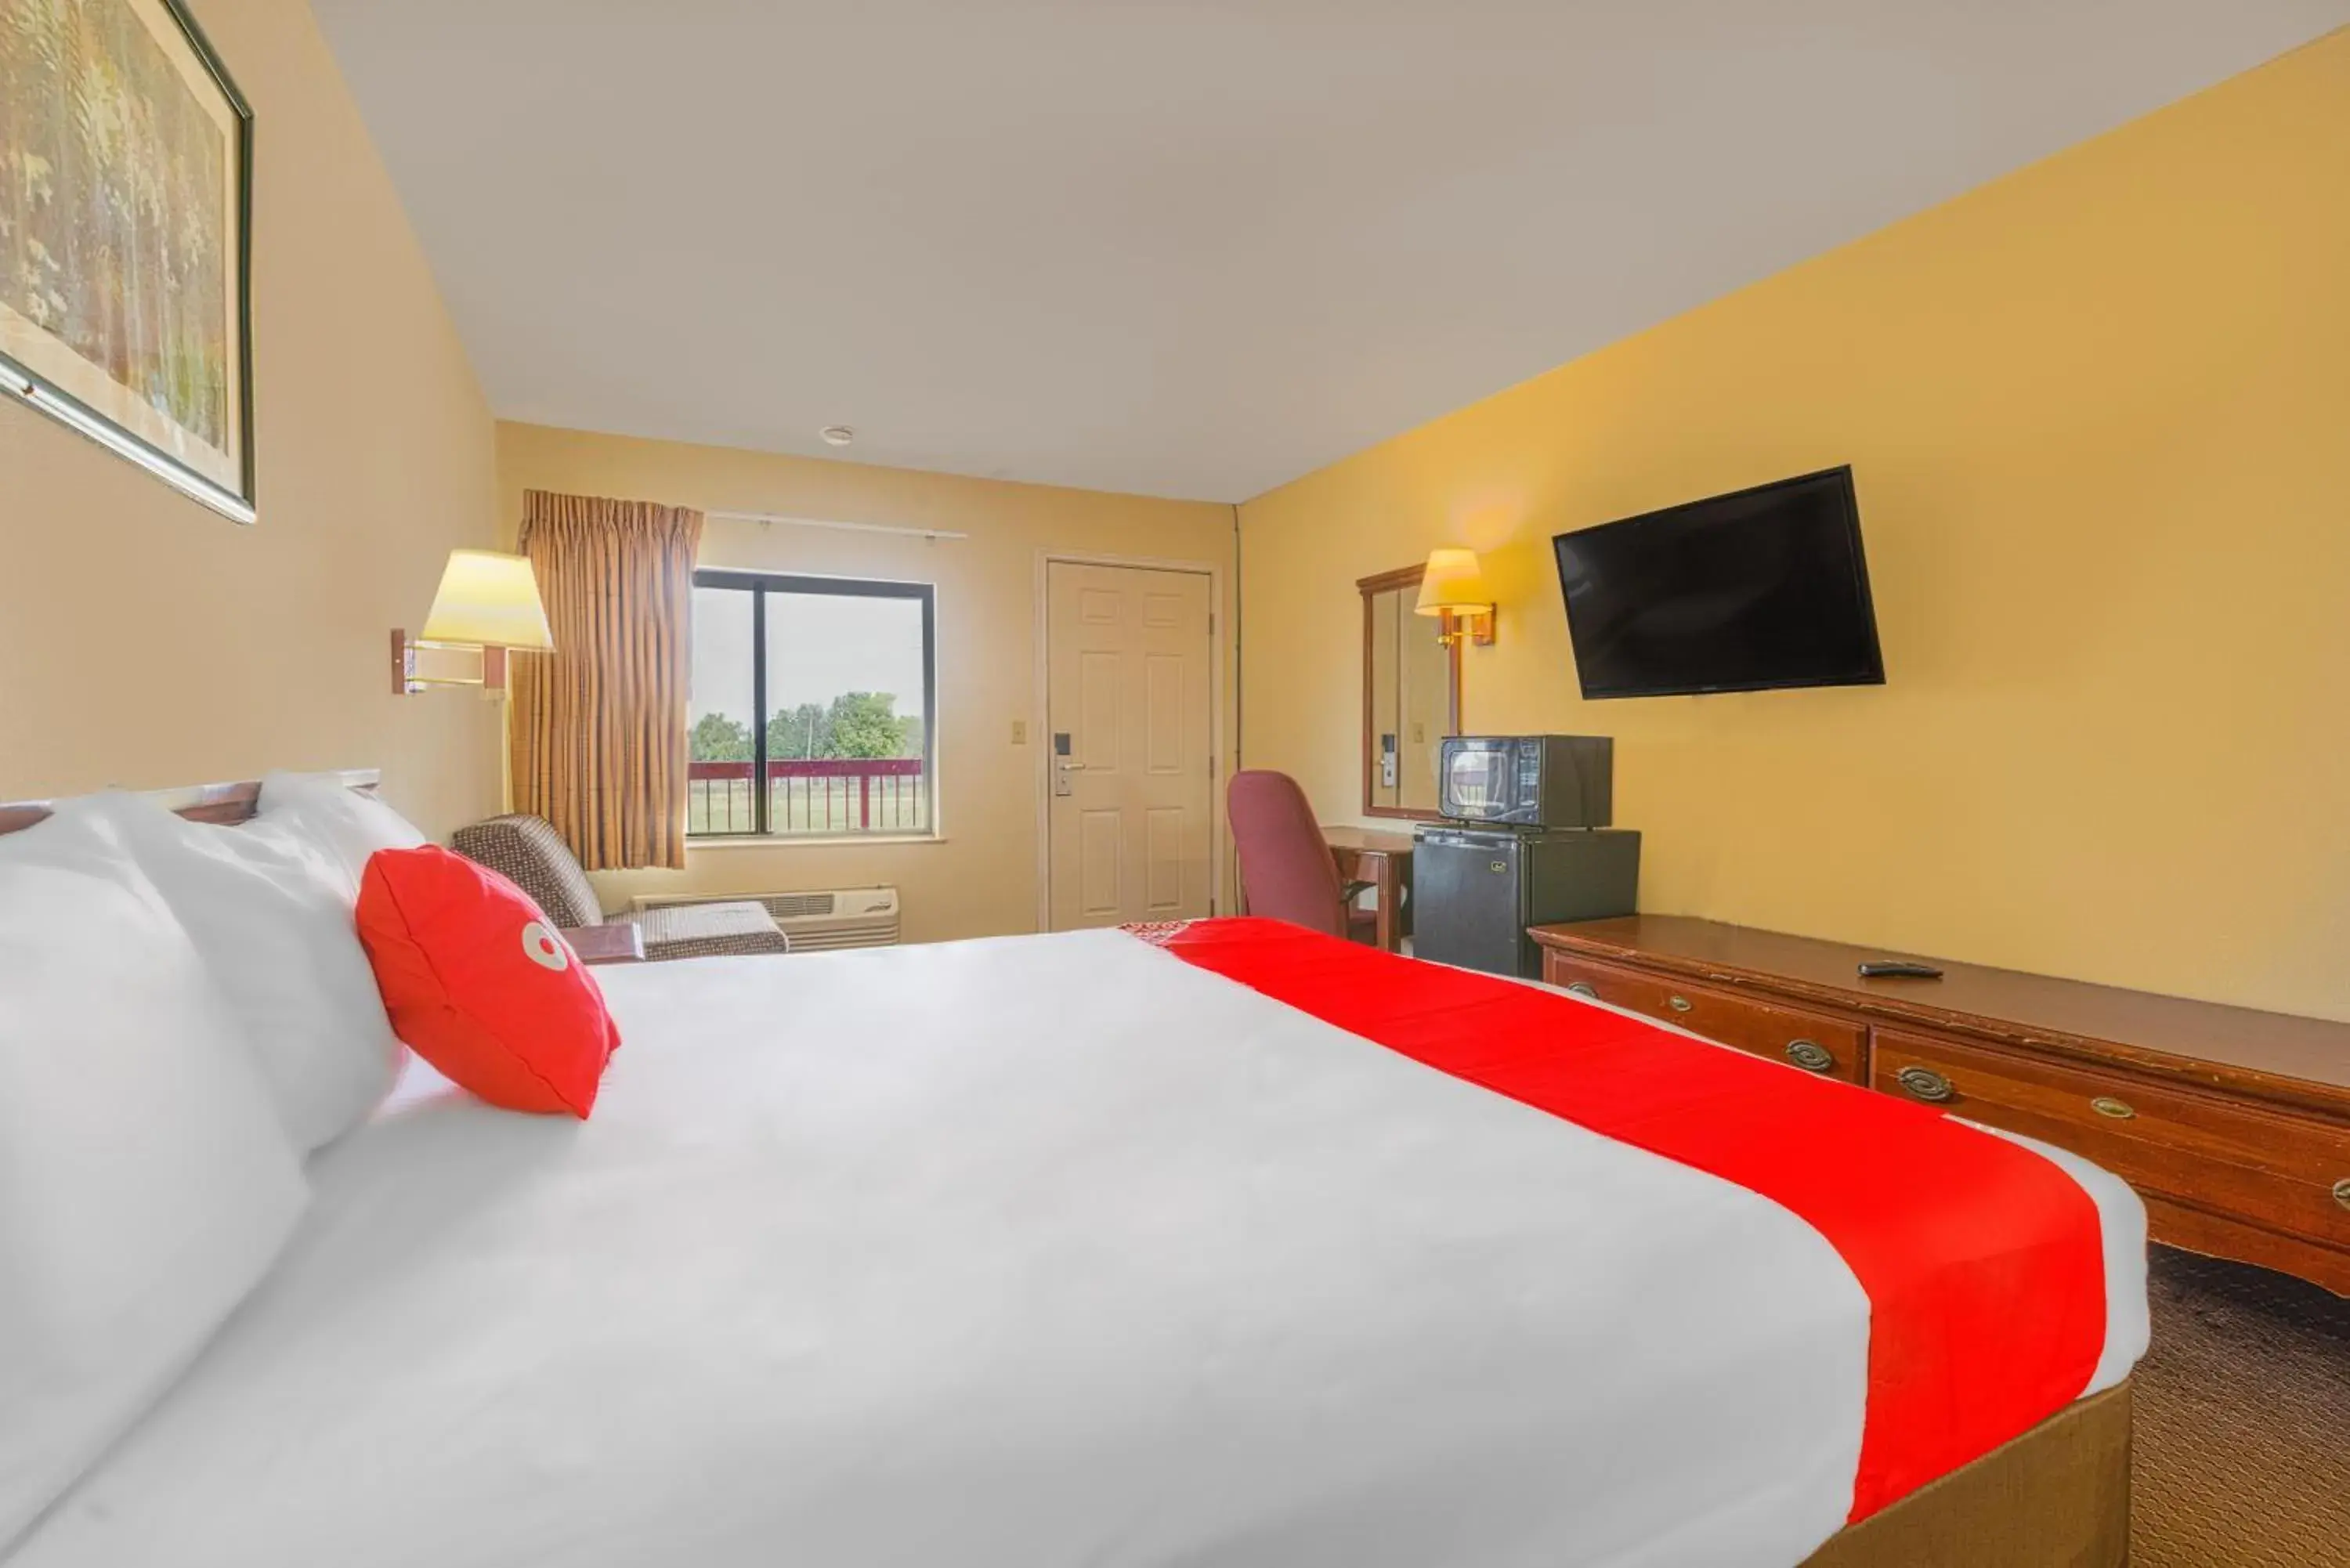 Bedroom in OYO Hotel Corpus Christi North I-37